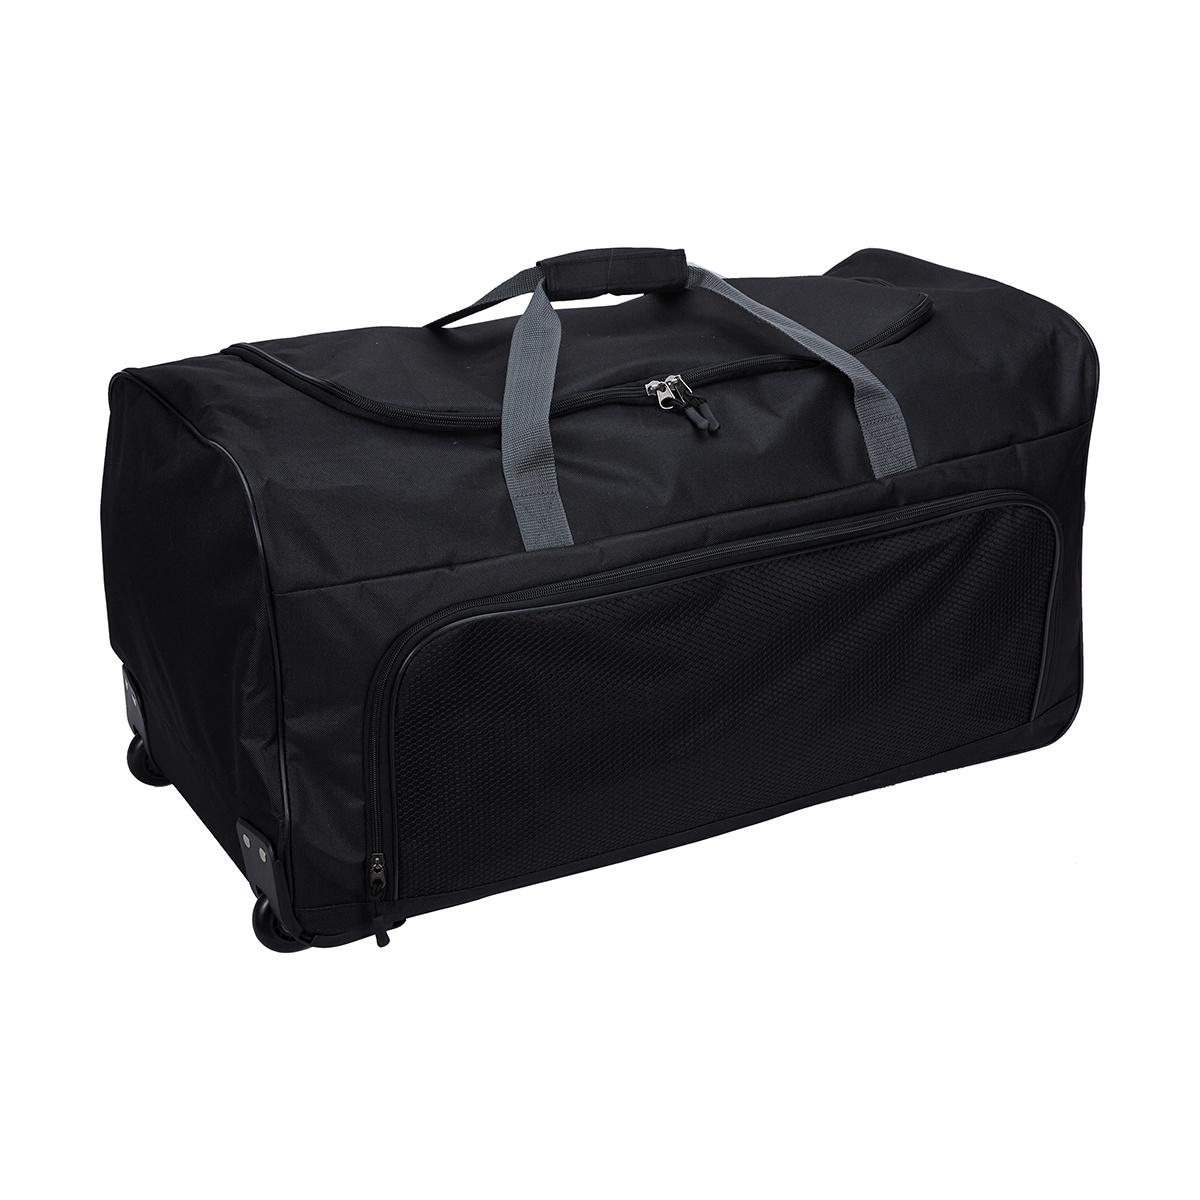 Large Duffle Bag with Wheels - Black | Kmart